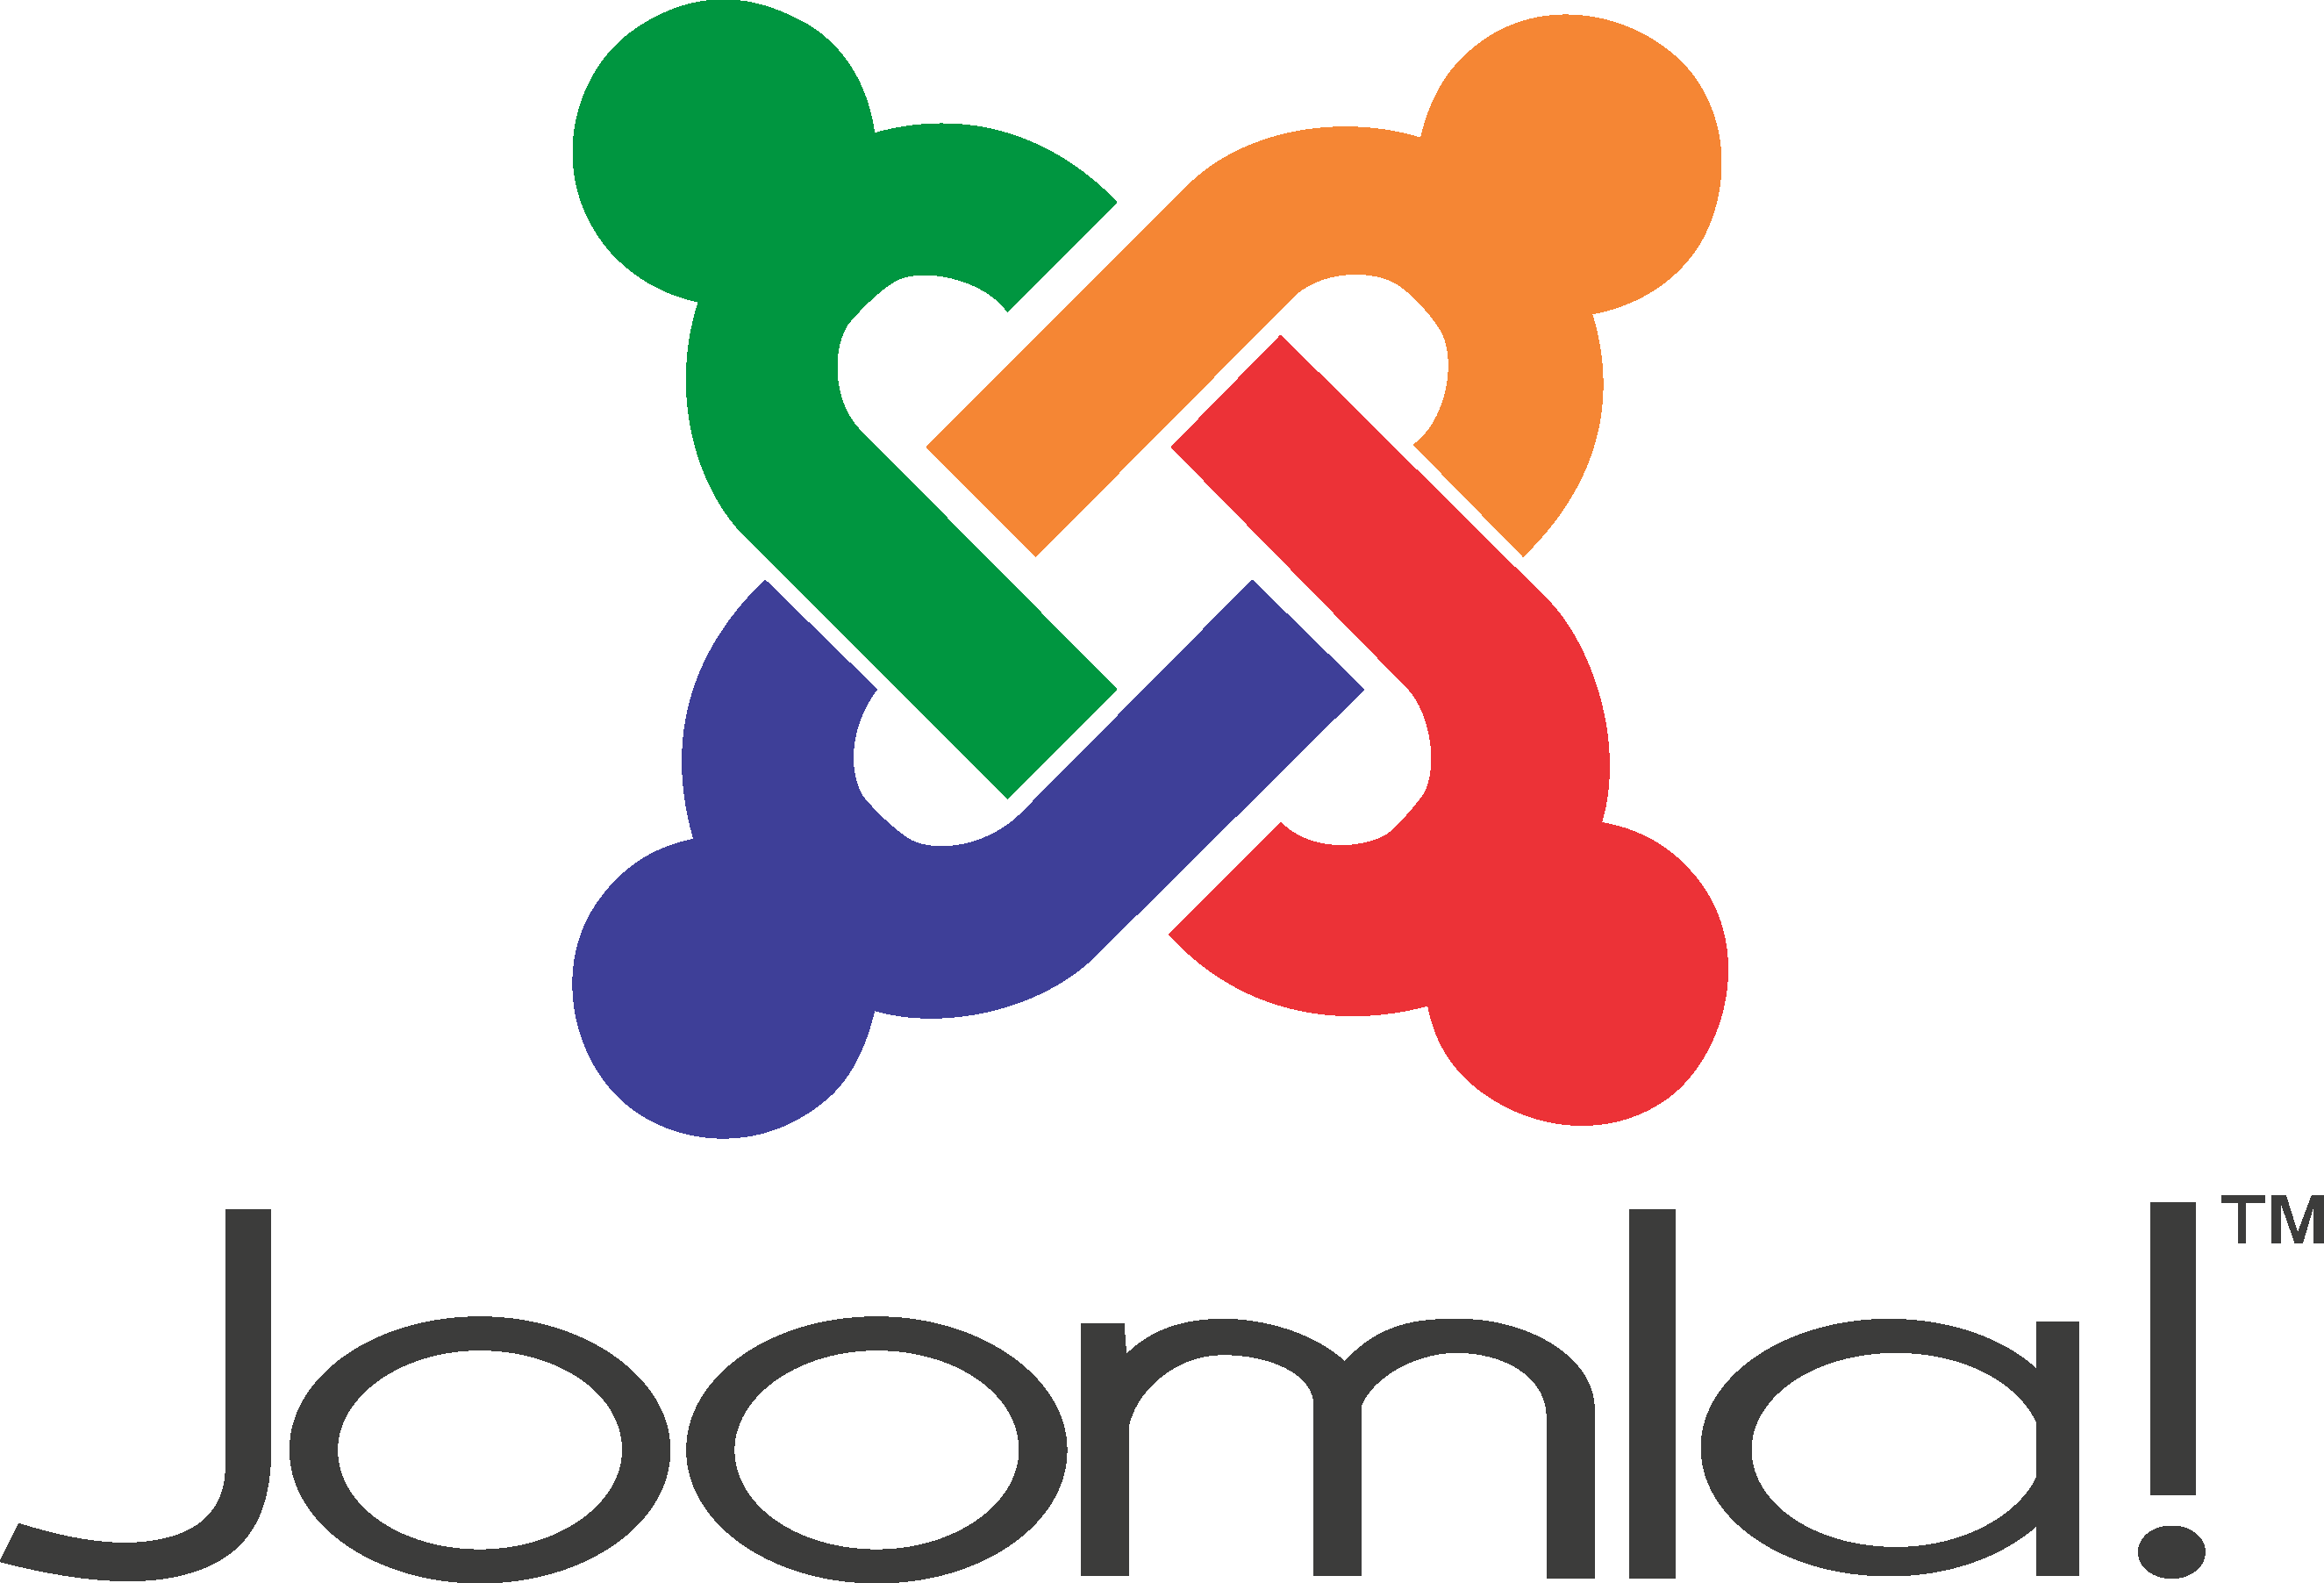 Joomla Logo png